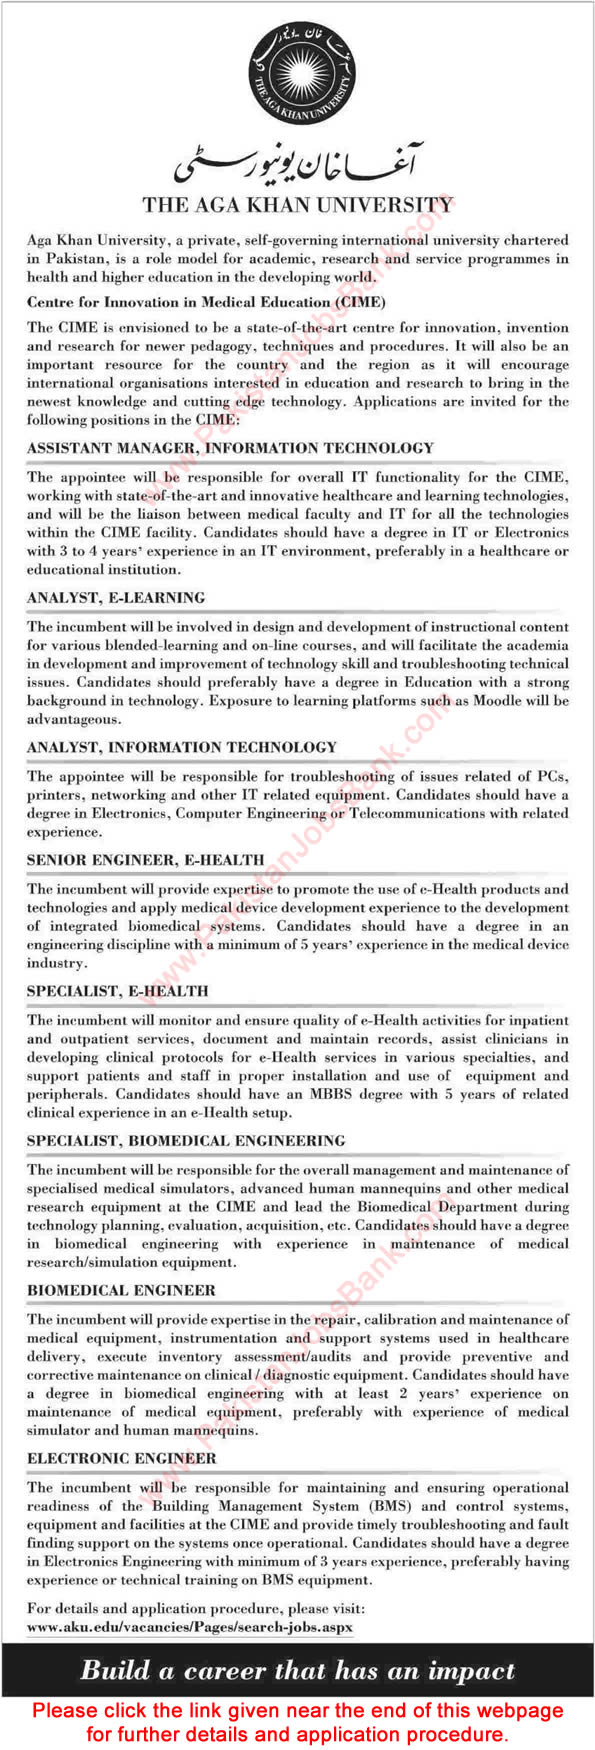 Aga Khan University Karachi Jobs 2015 April for Biomedical / Electronics Engineers & Others